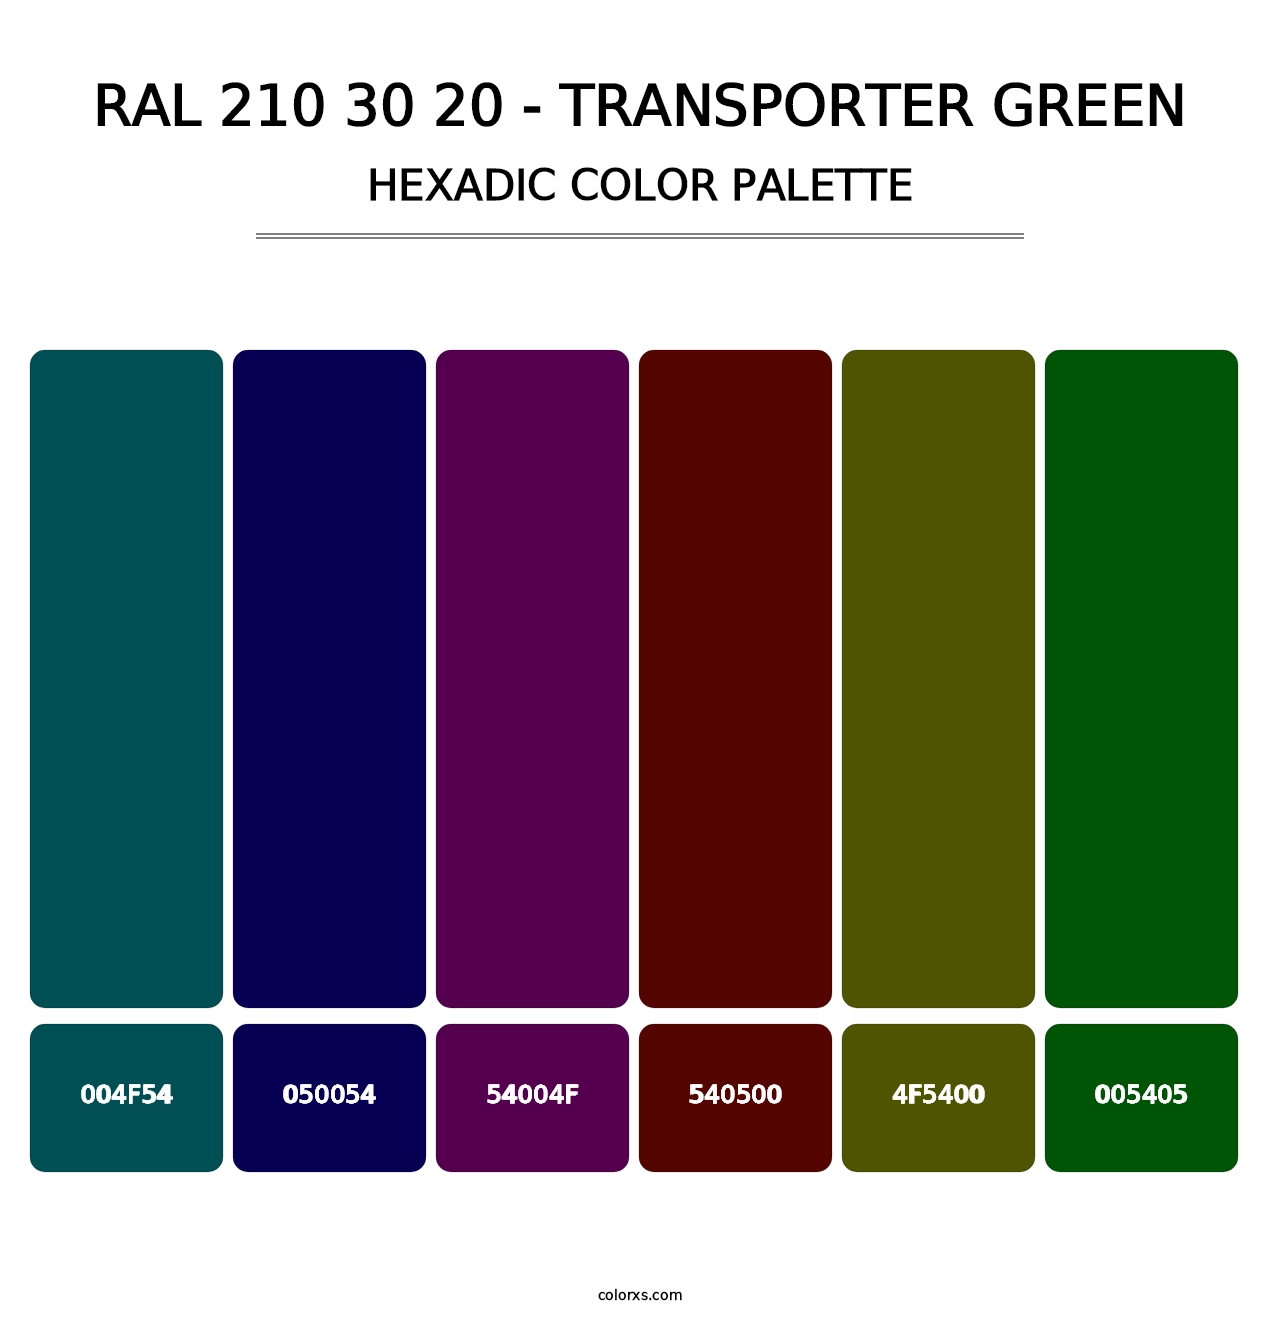 RAL 210 30 20 - Transporter Green - Hexadic Color Palette